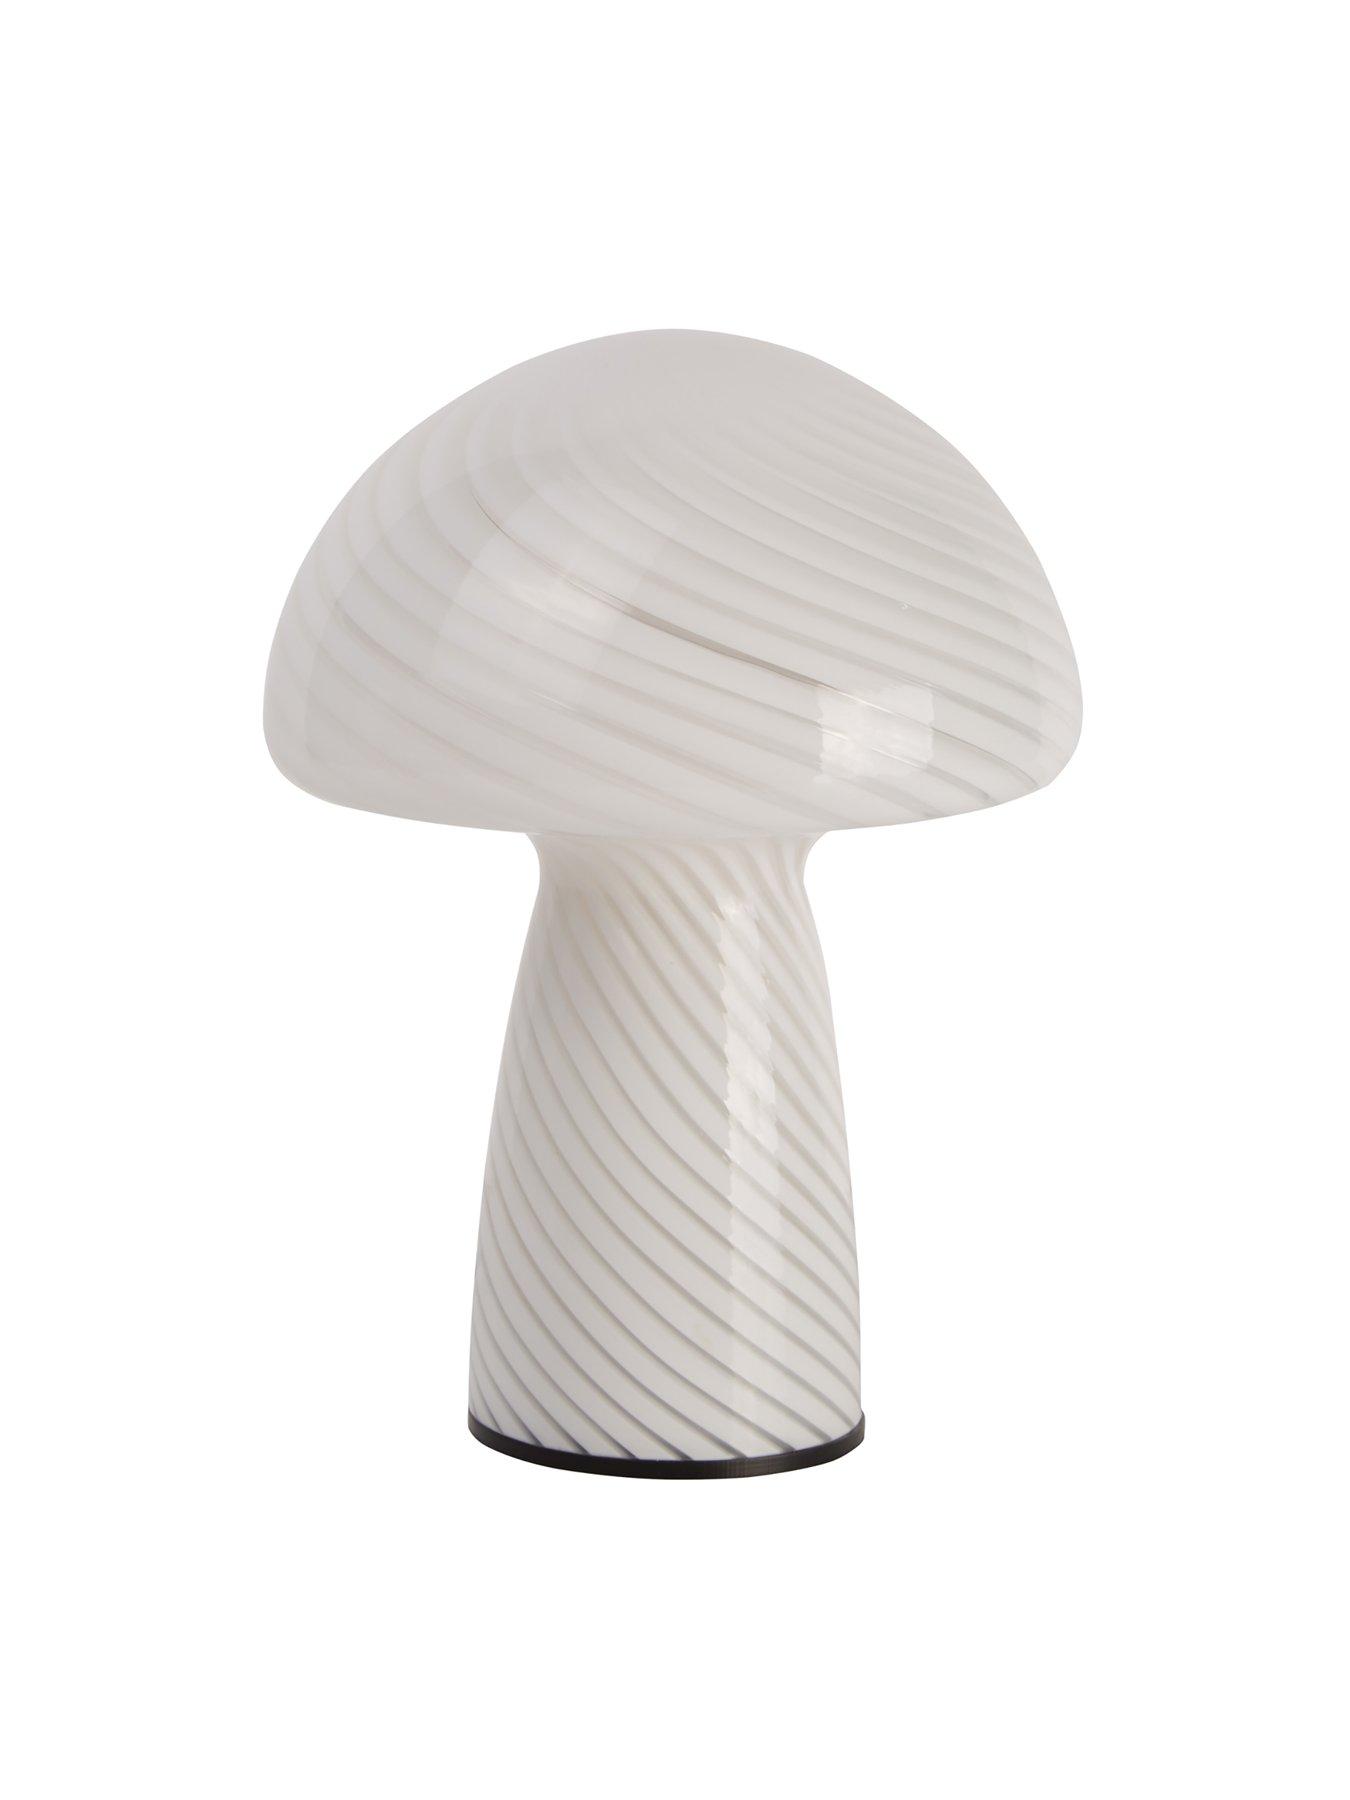 Glass Mushroom Table Lamp